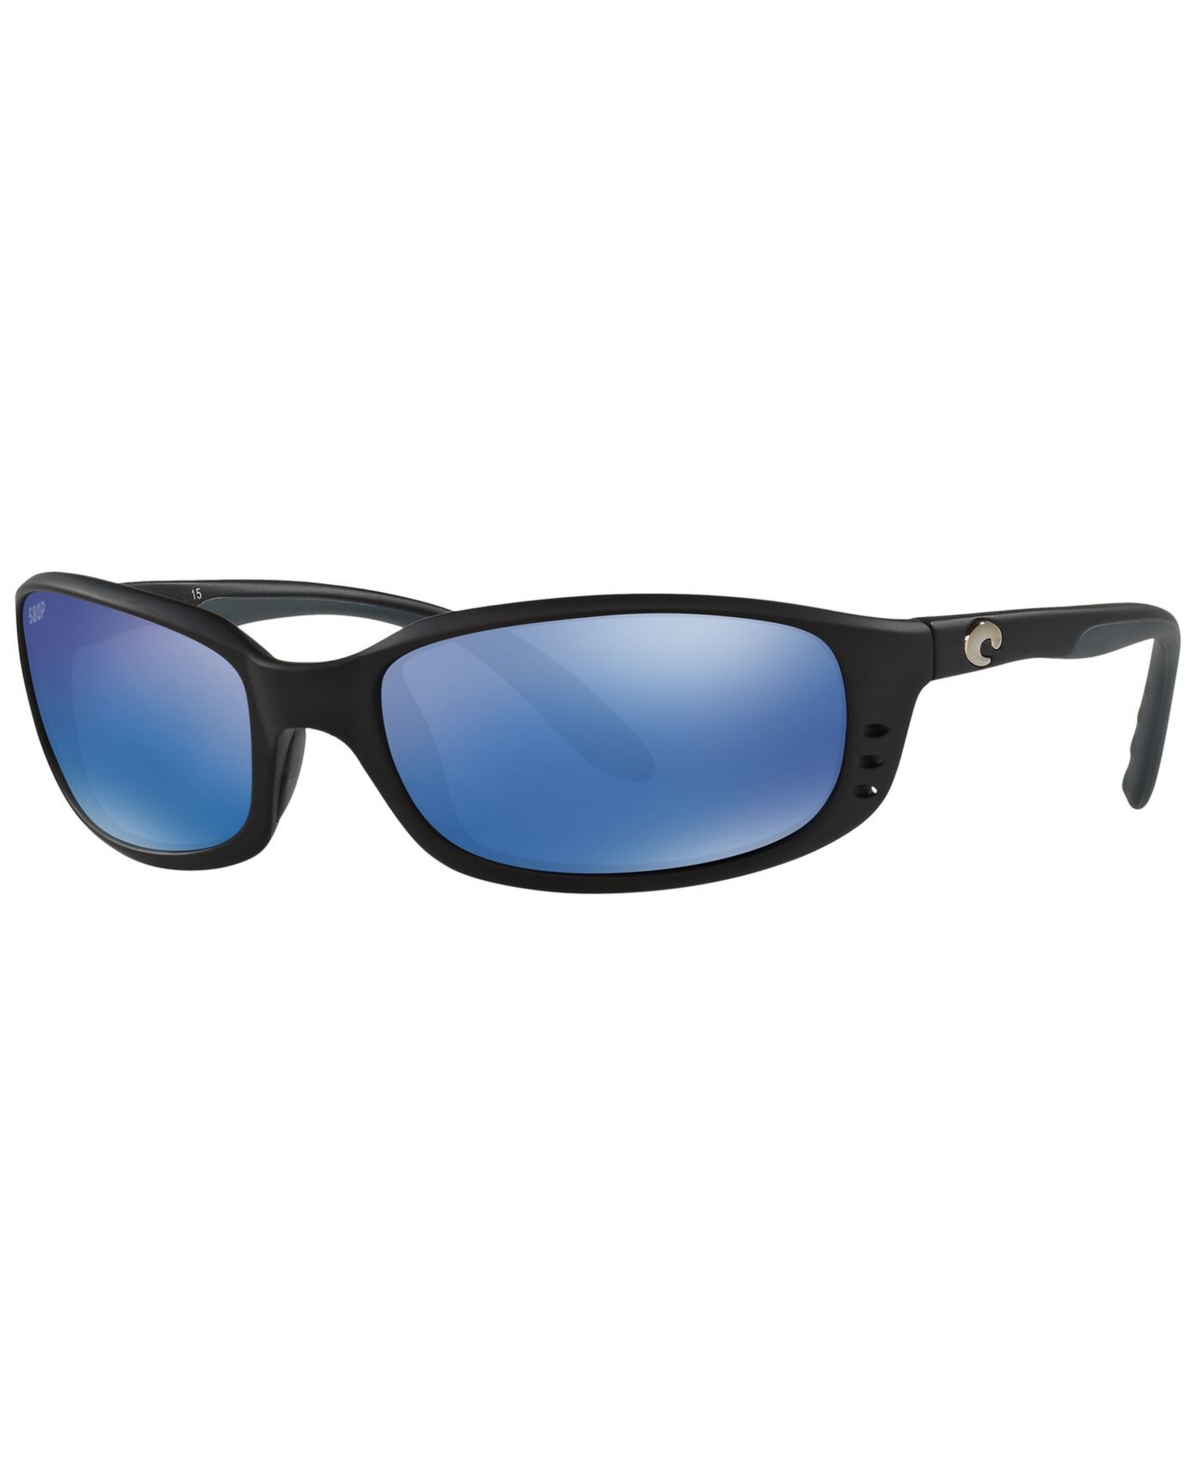 Unisex Polarized Sunglasses, 6S000184 - BLACK/BLUE MIR POL